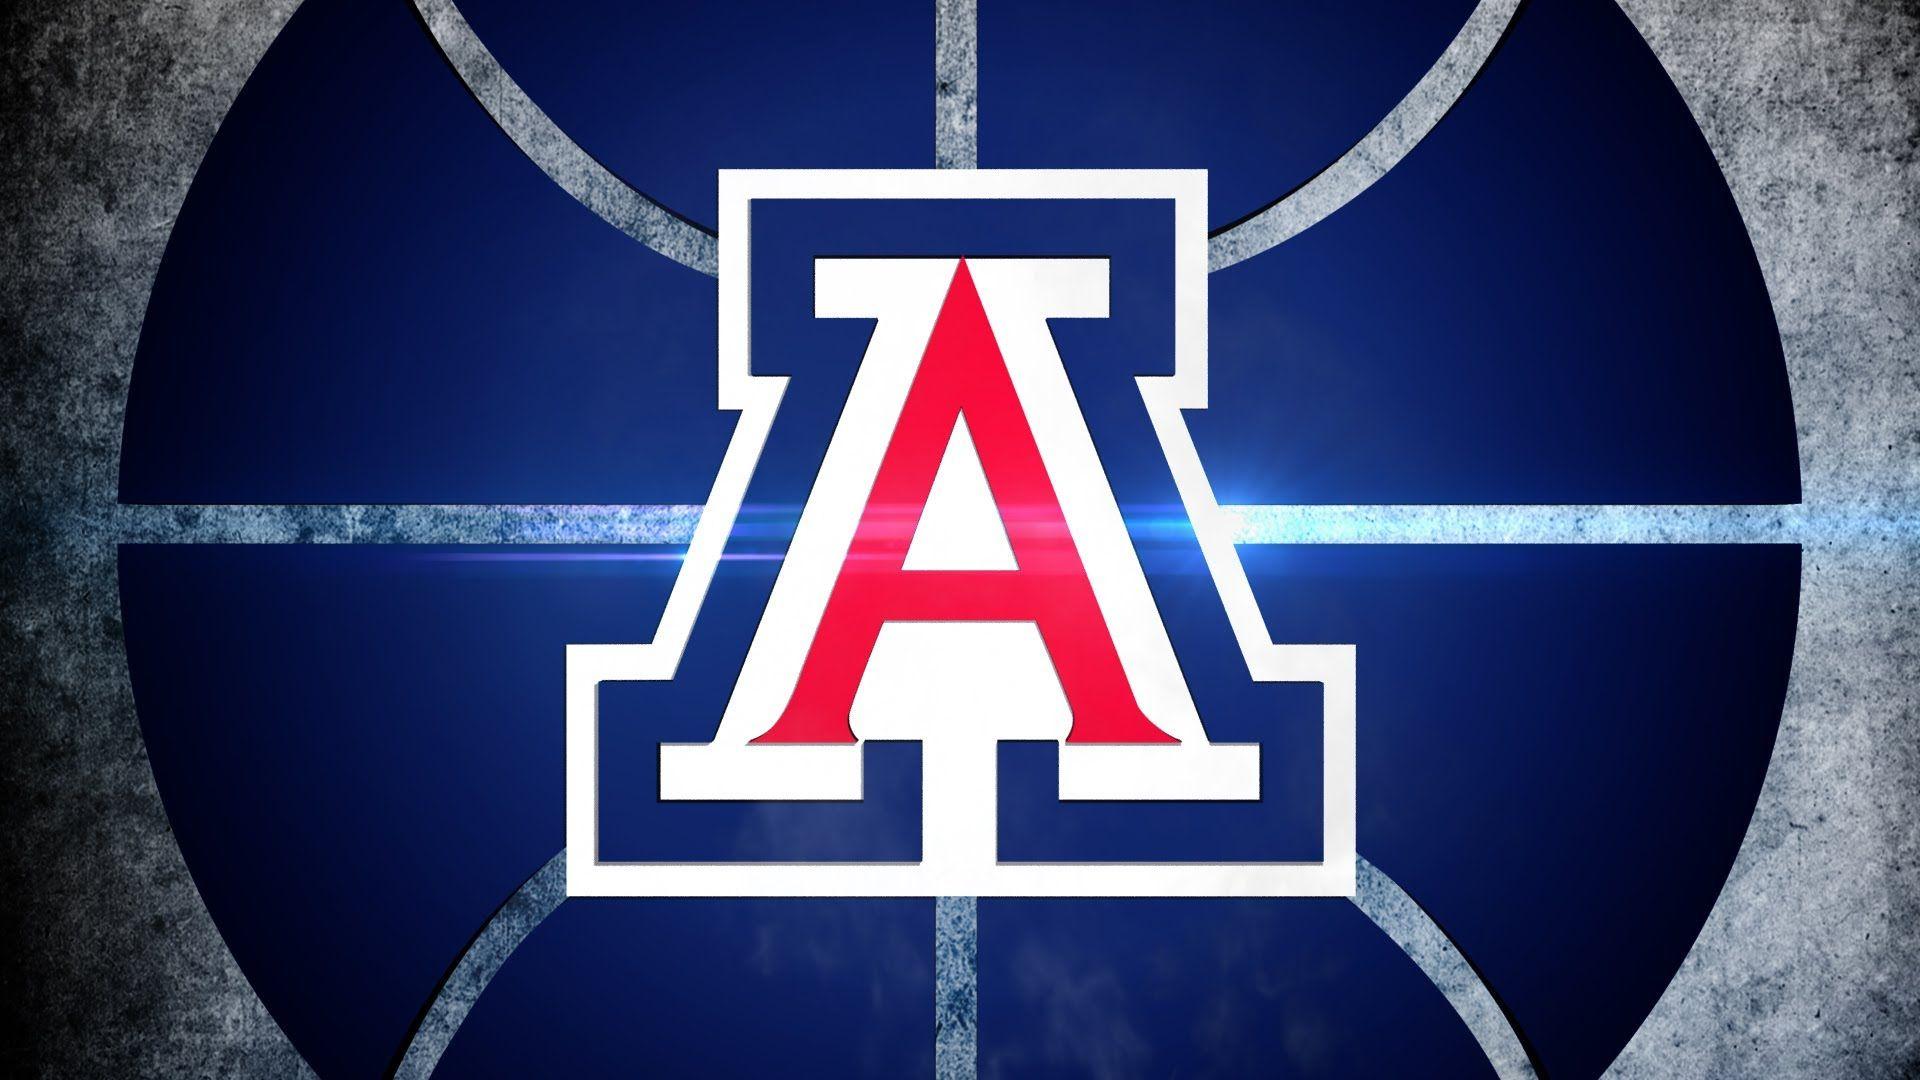 U of a Basketball Logo - Download University of Arizona Wildcats Basketball Logo Wallpaper ...